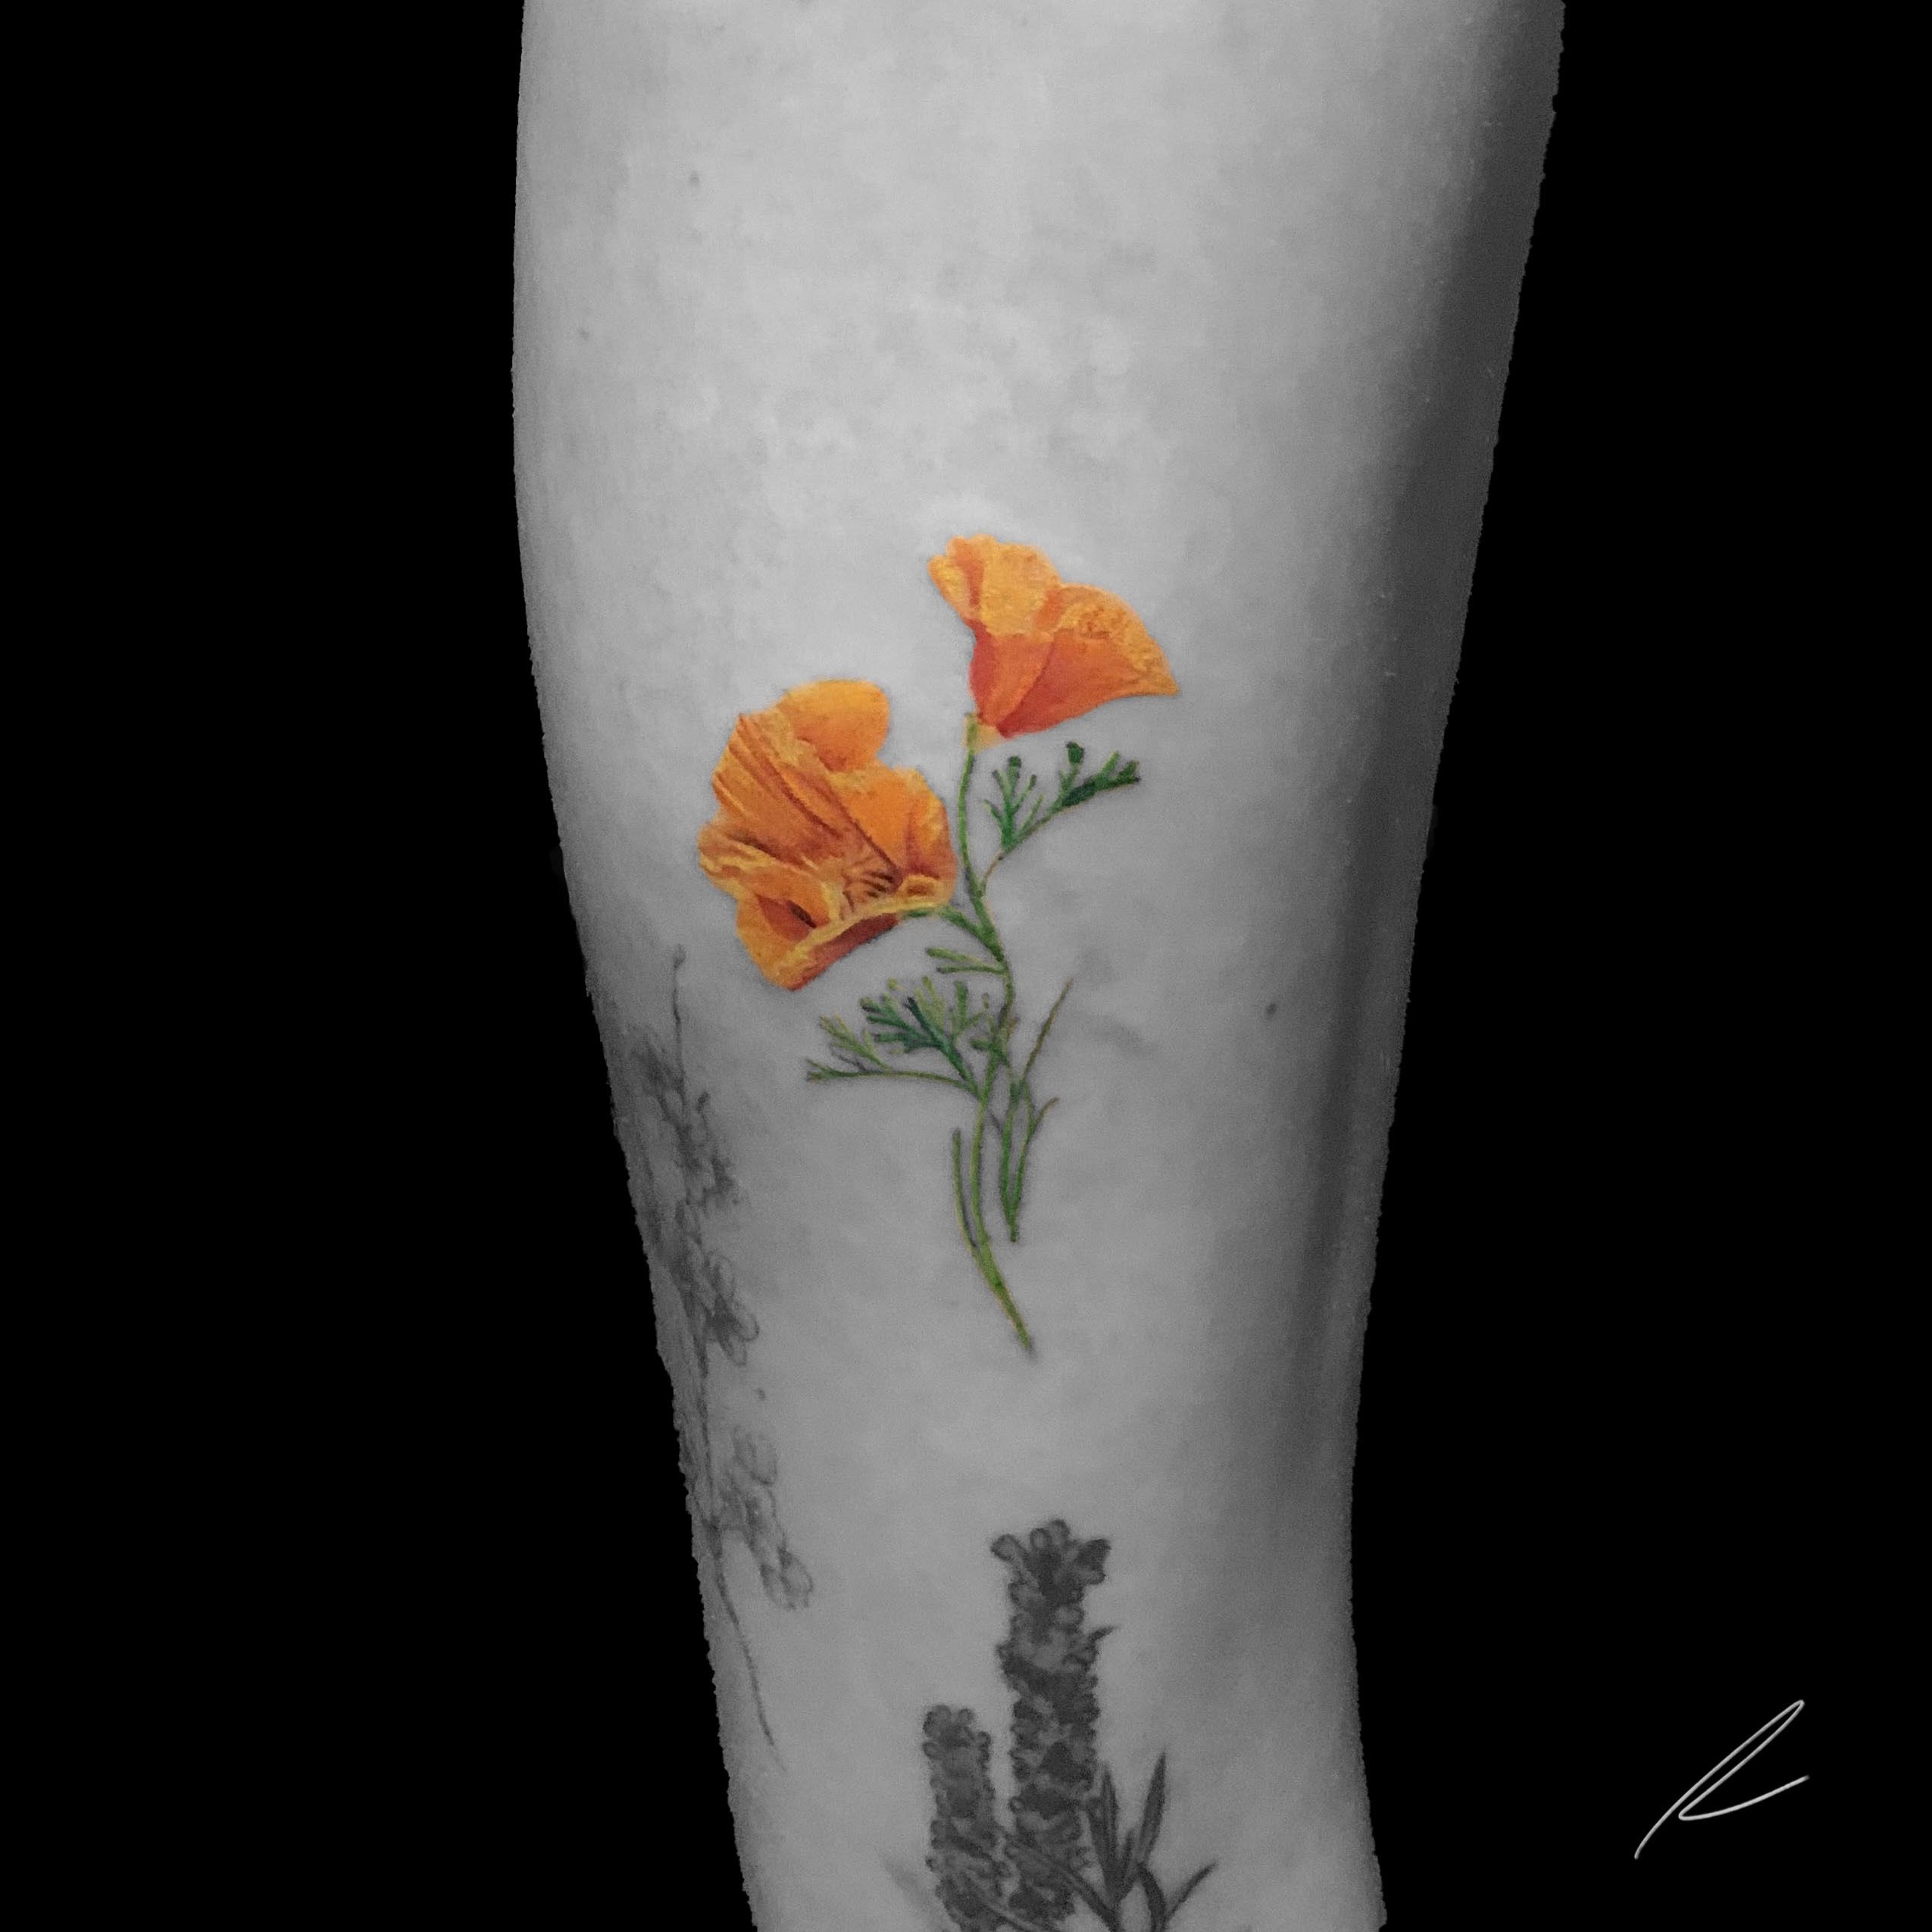 Samsquantch  A little california poppy around the leg action